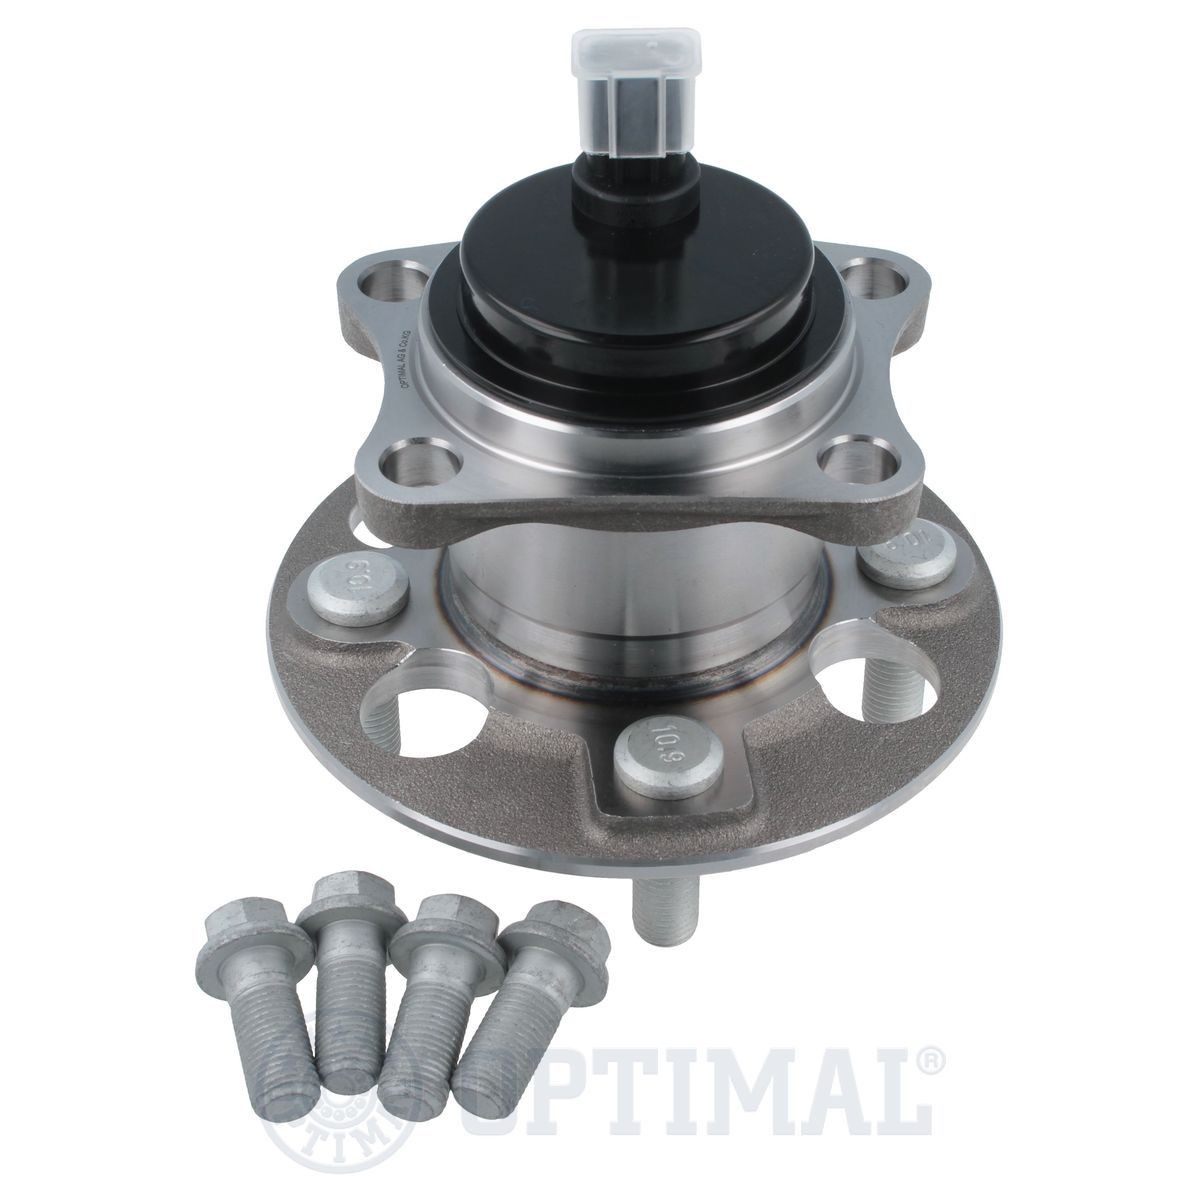 OPTIMAL 982188 Wheel bearing kit with integrated ABS sensor, 135, 74 mm